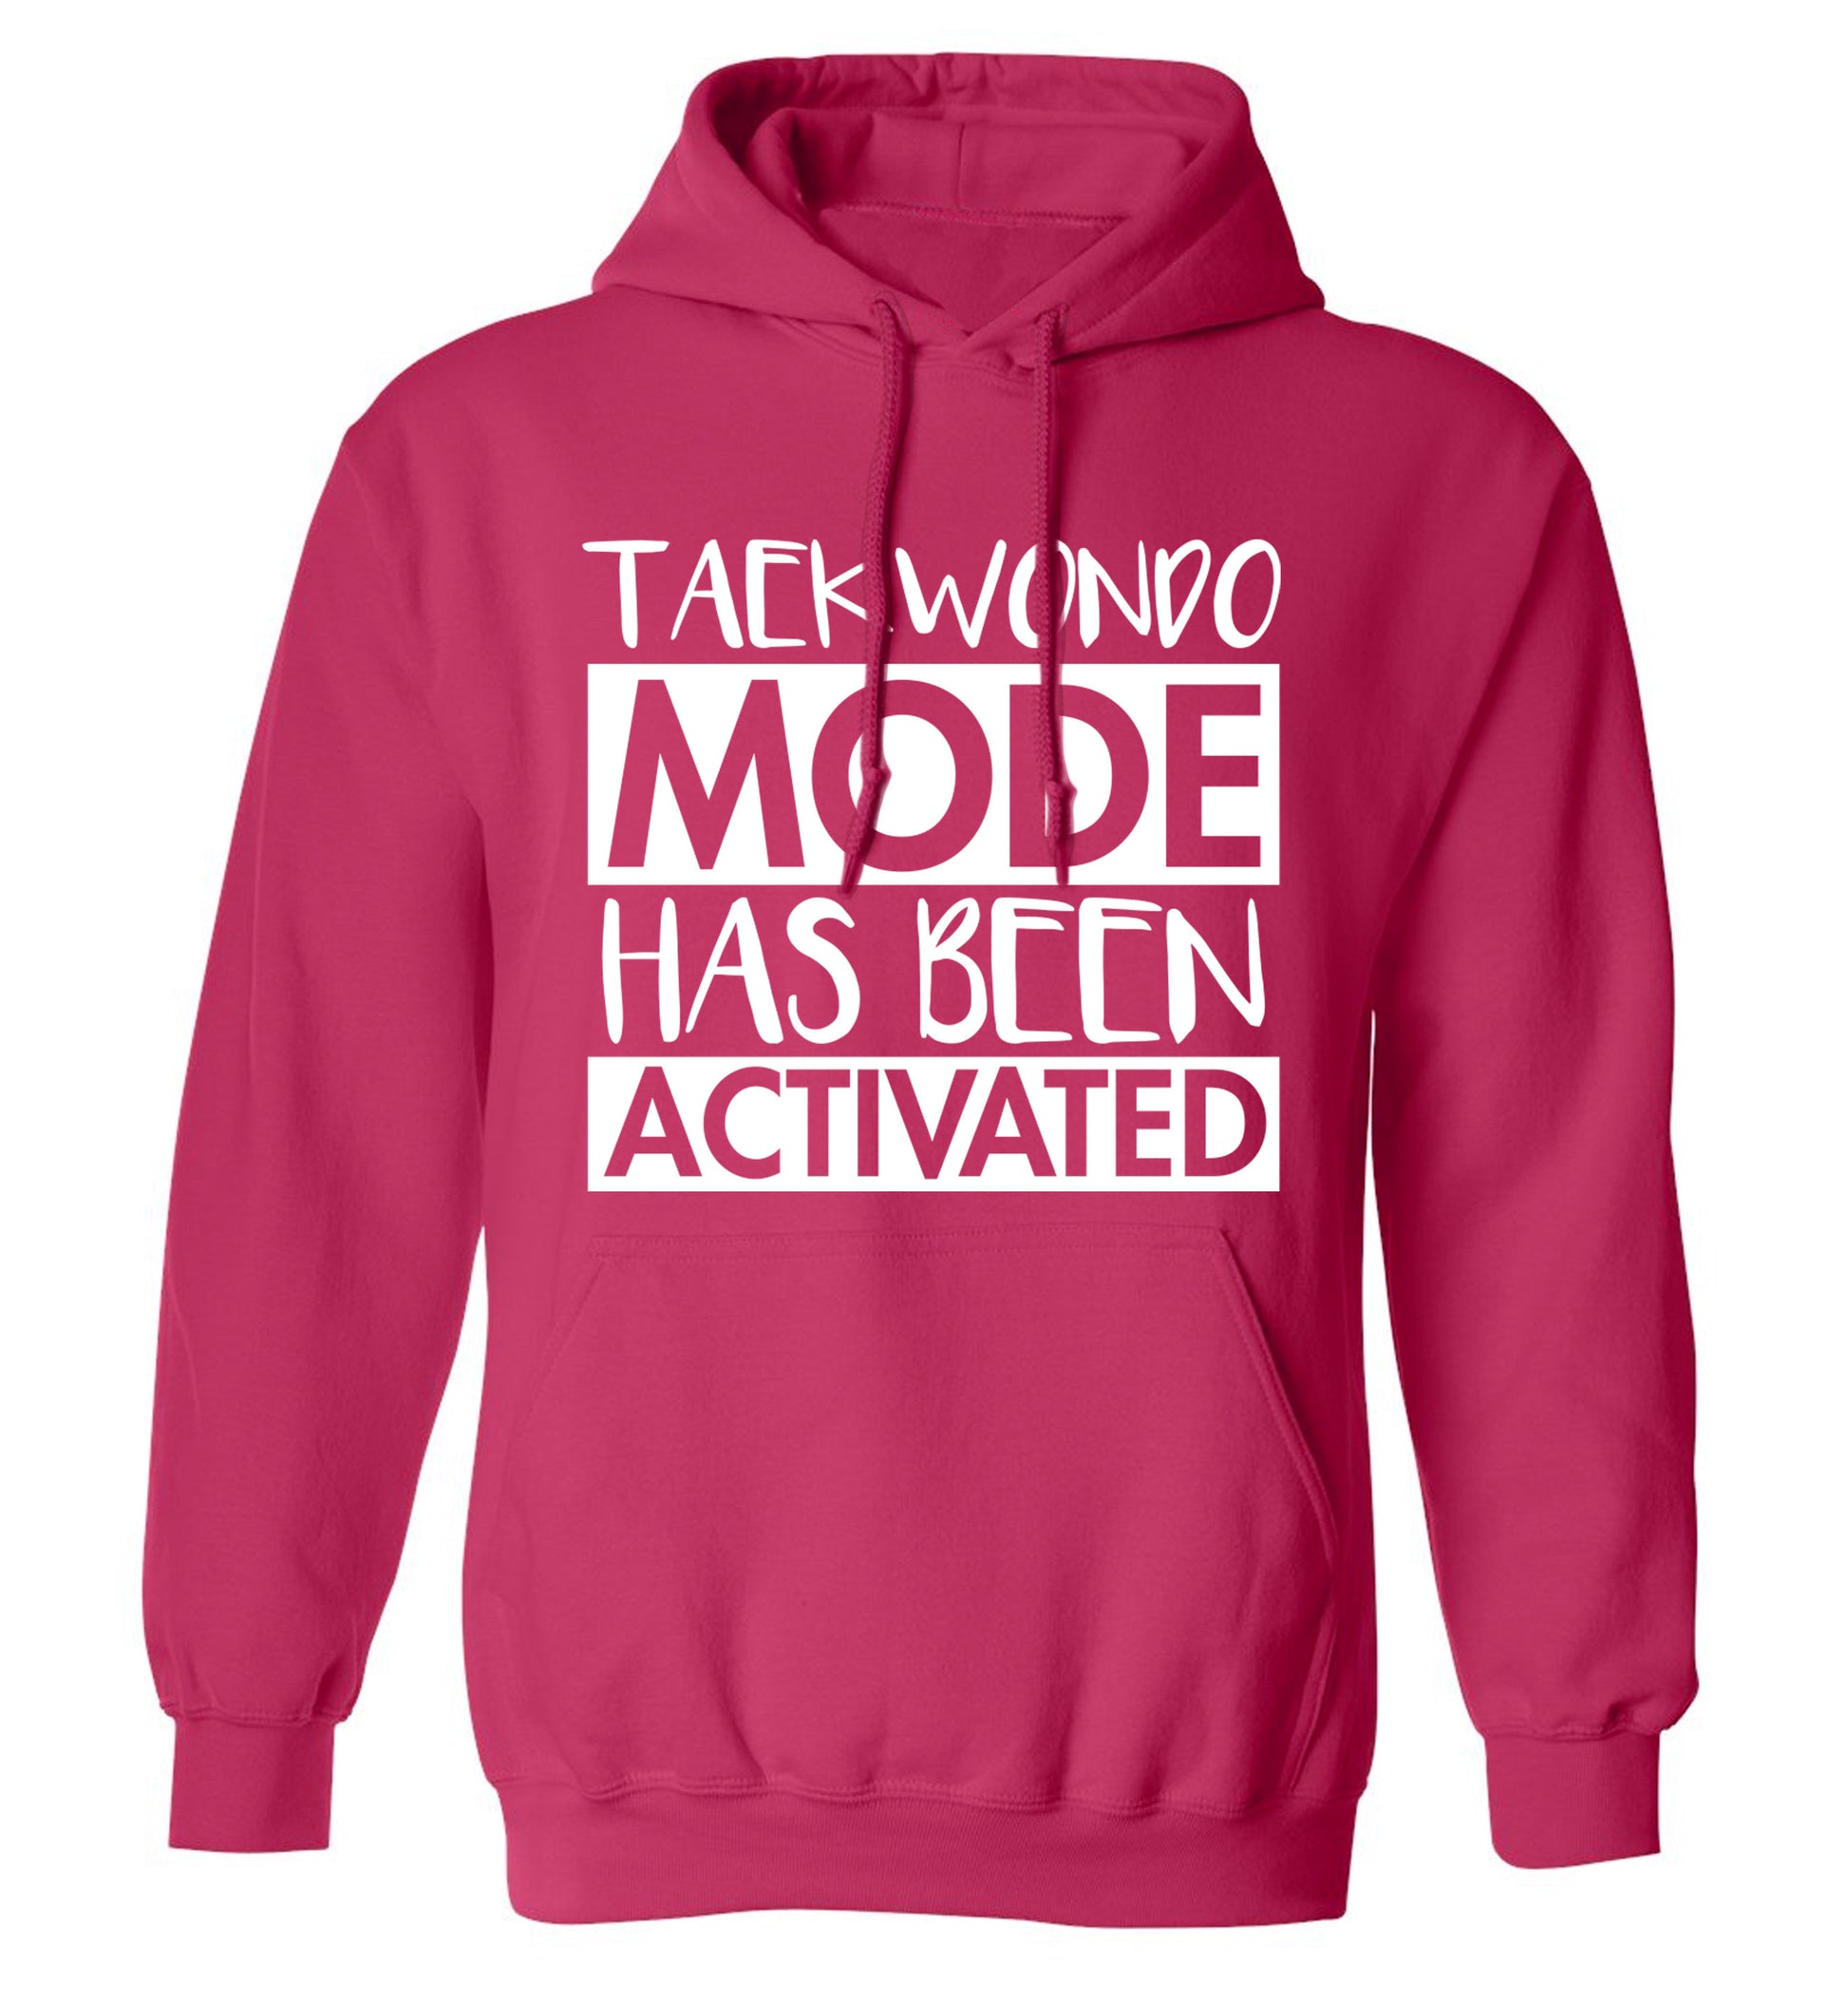 Taekwondo mode activated adults unisex pink hoodie 2XL